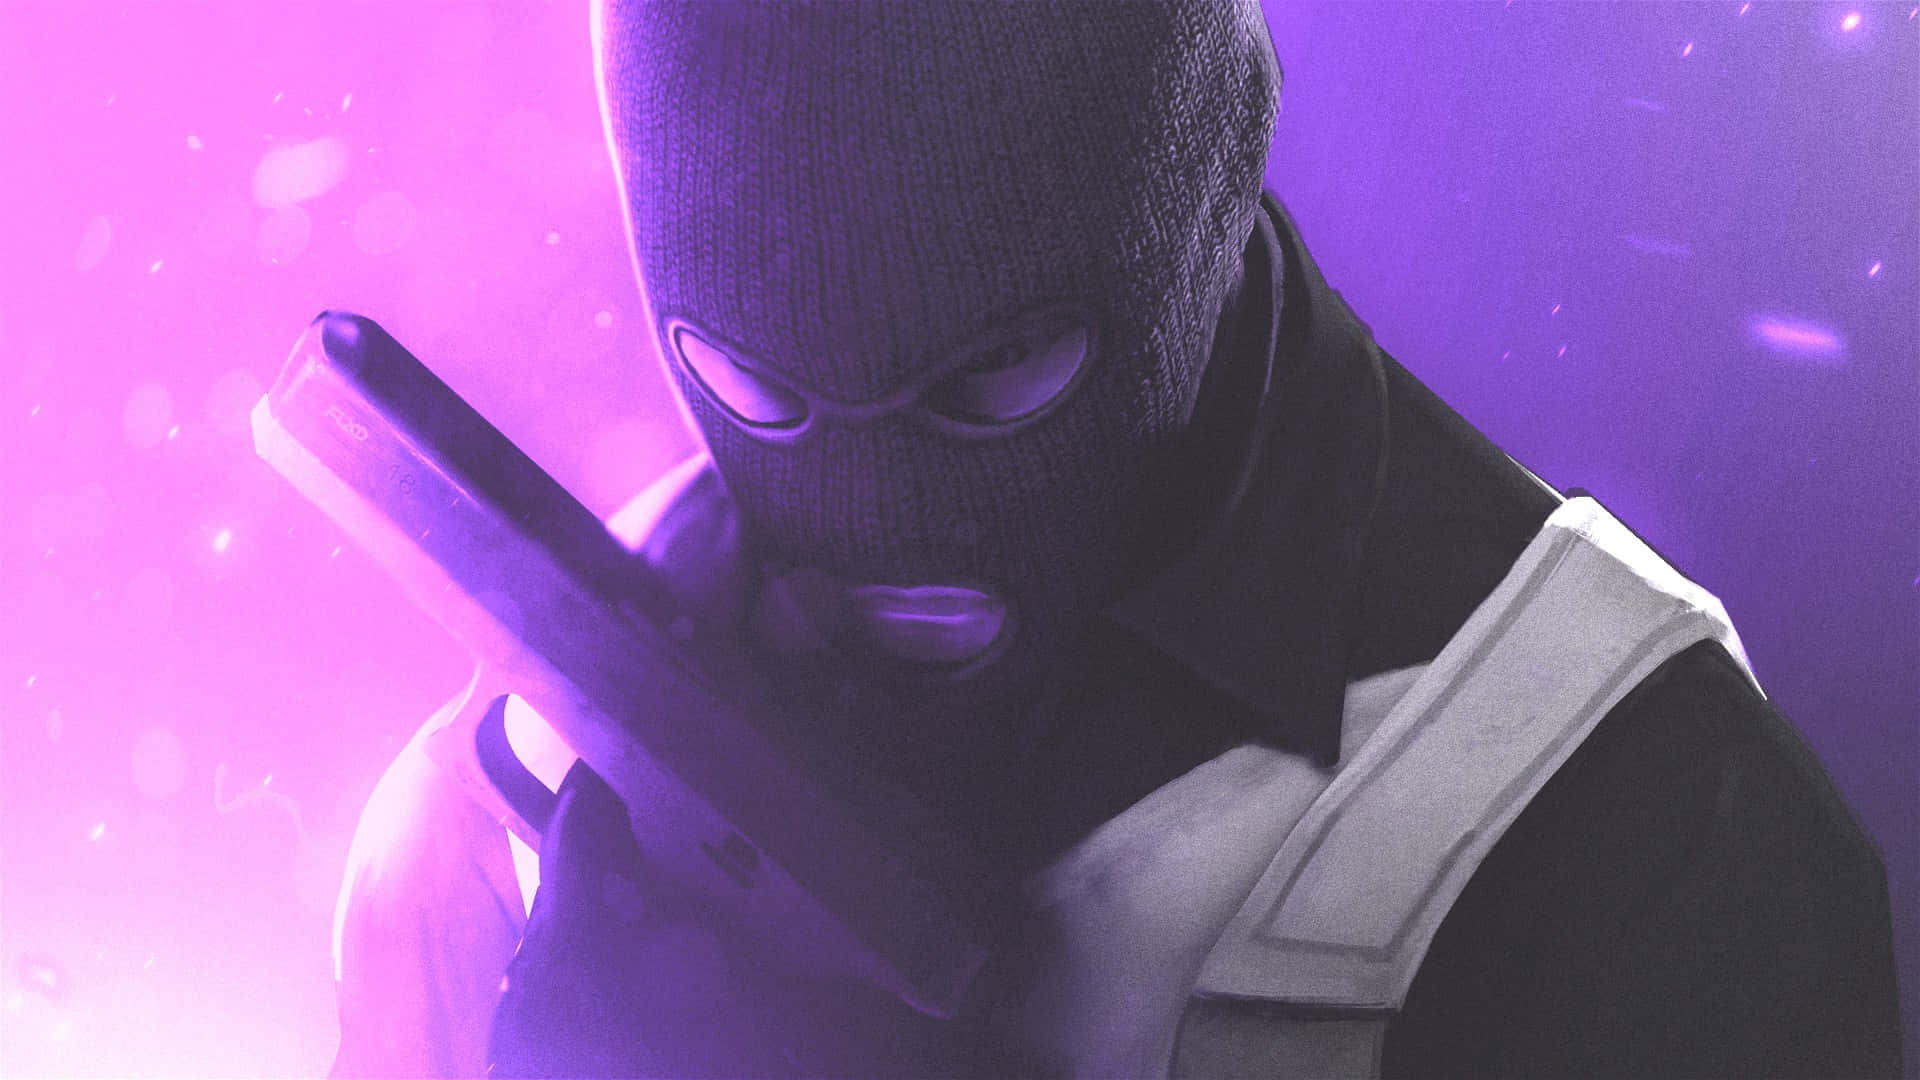 Fundode Tela Do Counter Strike Global Offensive Em Pink And Purple De 1080p.